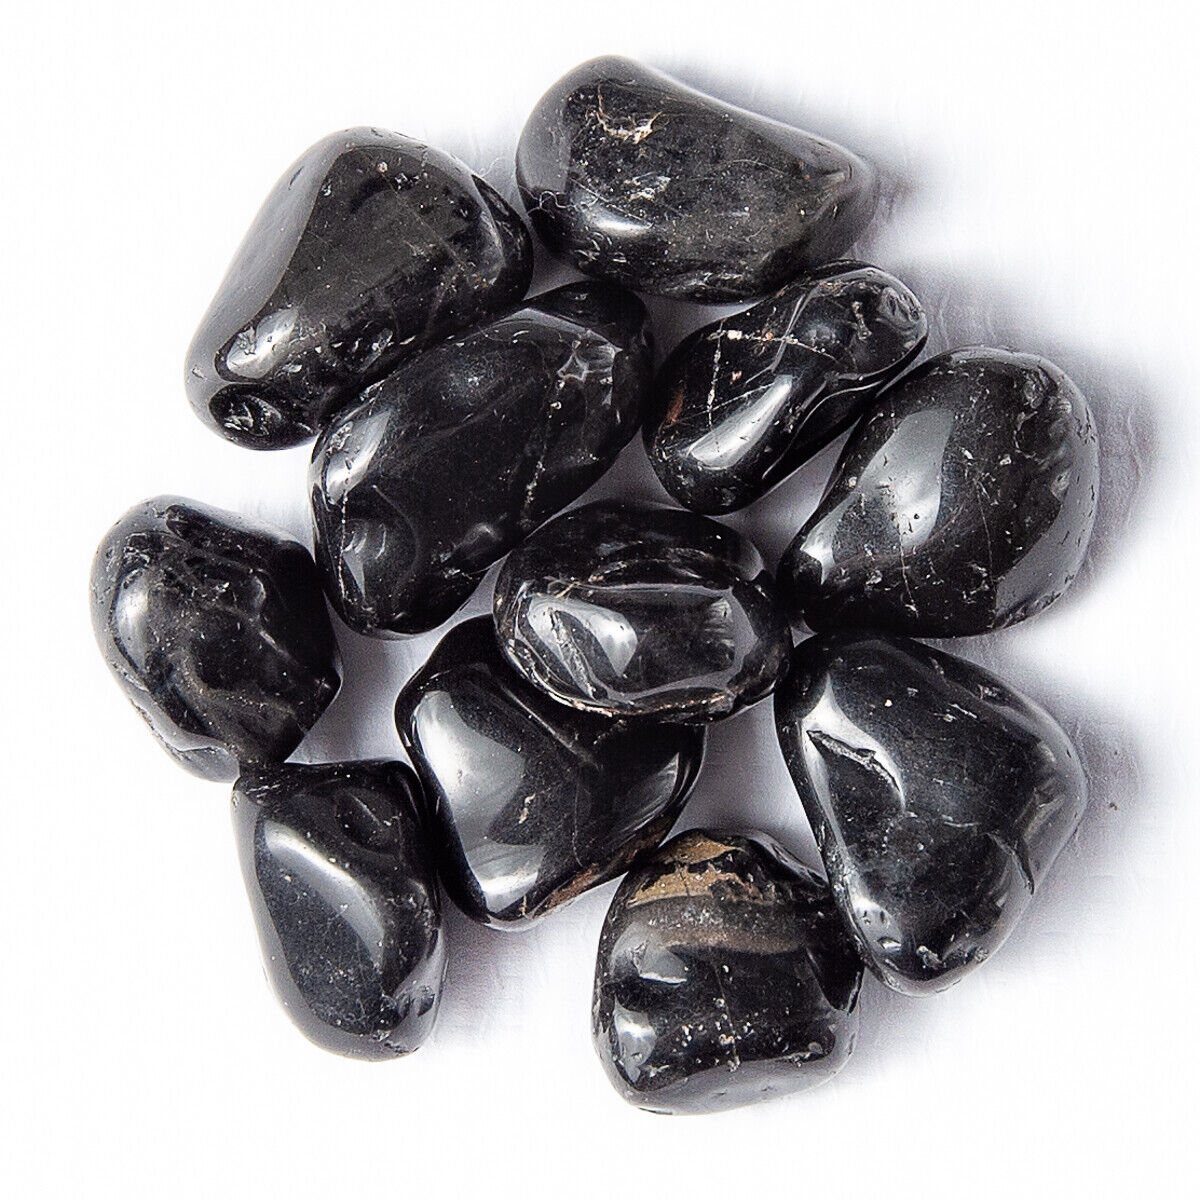 50g Tumbled Black Onyx Gemstone Crystals 5-15 Stones Small Gem Rock Specimens